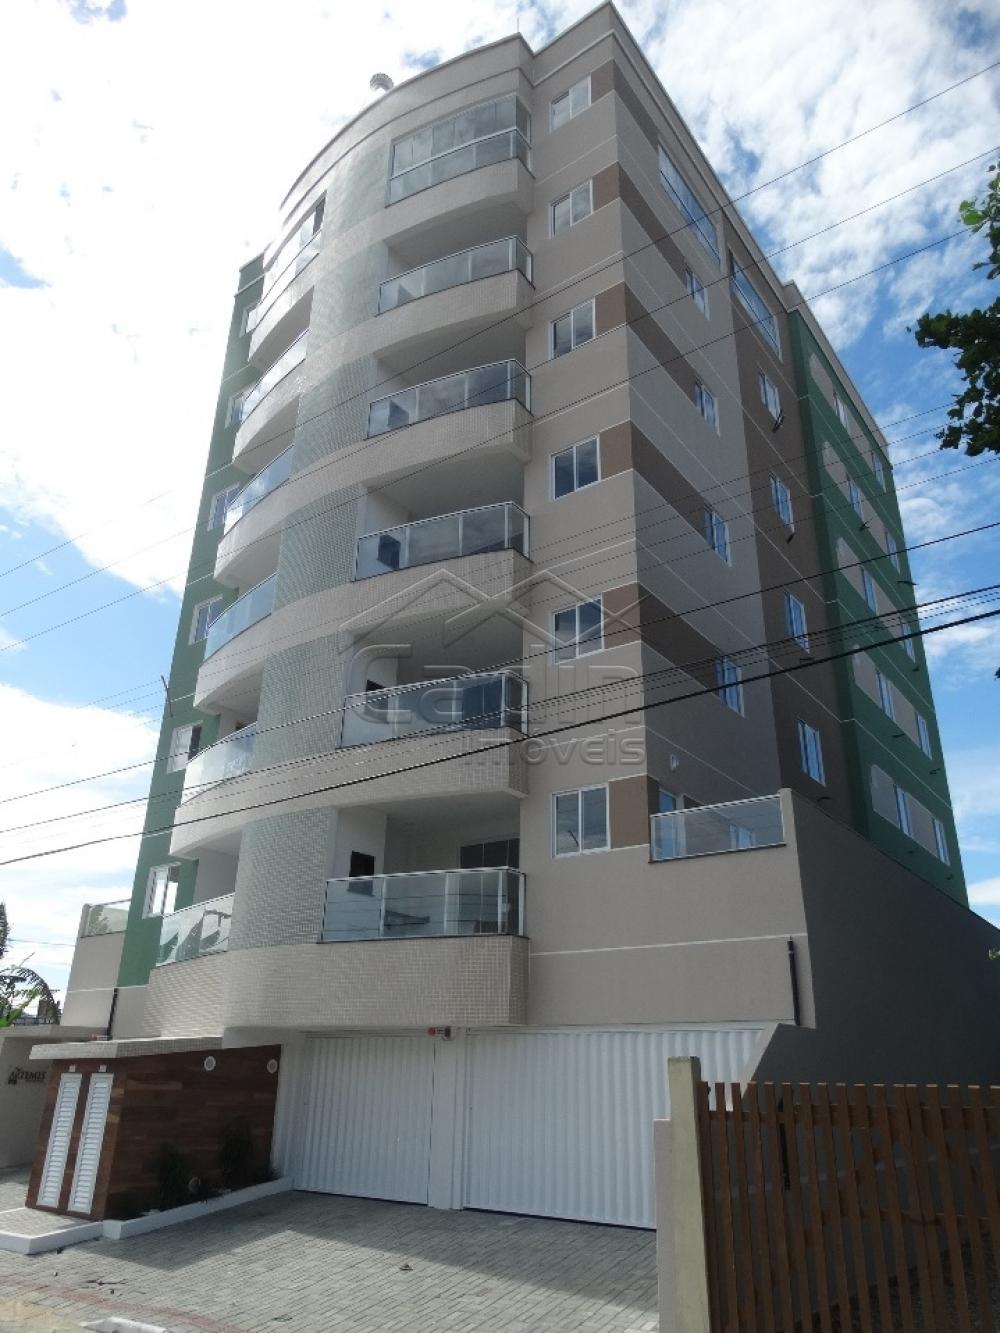 Navegantes Gravata Apartamento Venda R$650.000,00 Condominio R$380,00 2 Dormitorios 1 Vaga 